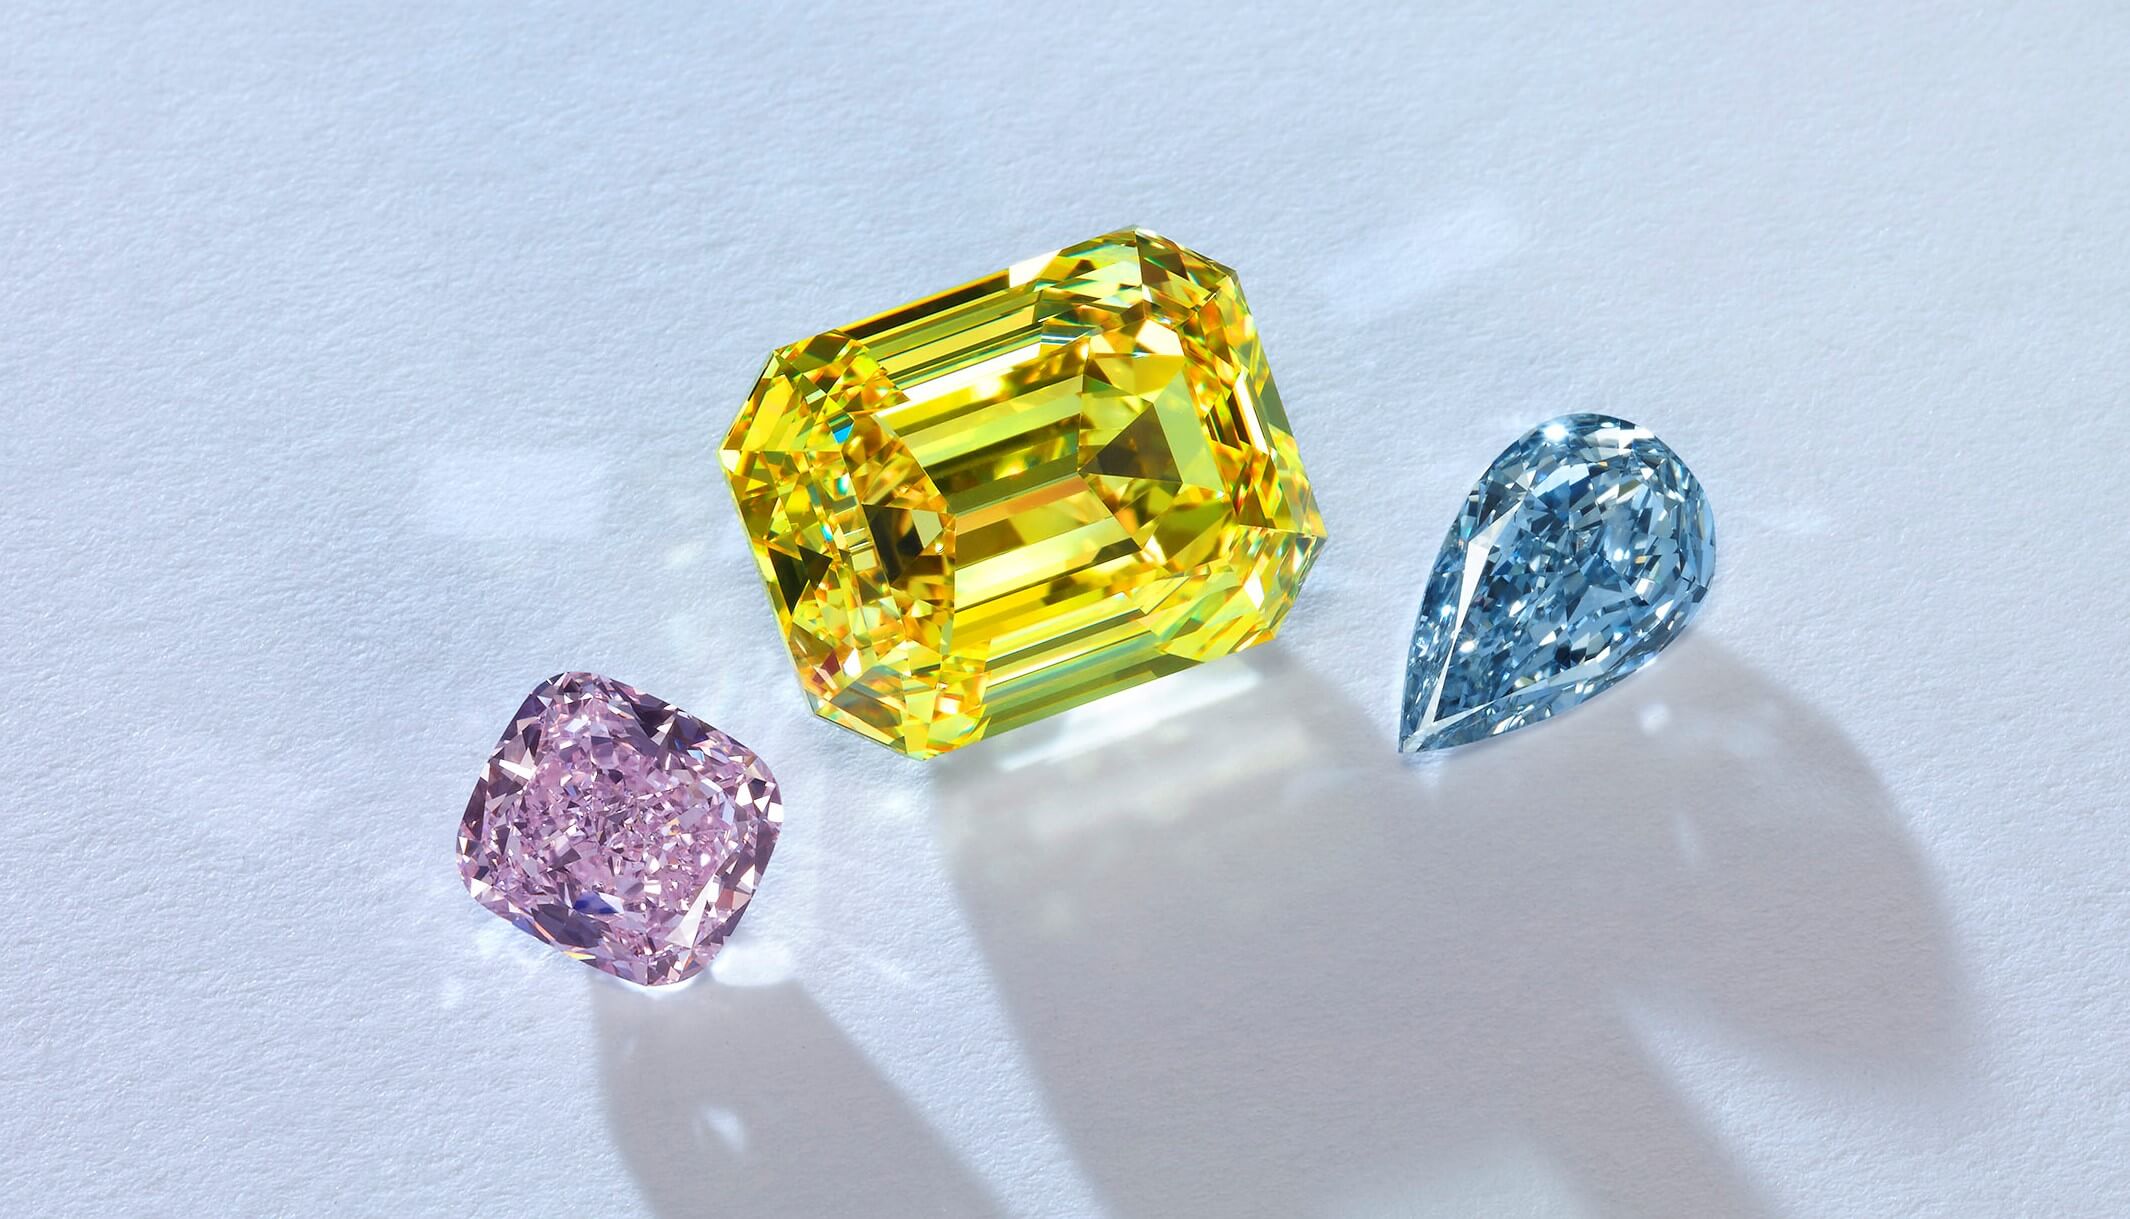 International Fancy Color Diamond Dealers Discuss Market Dynamics